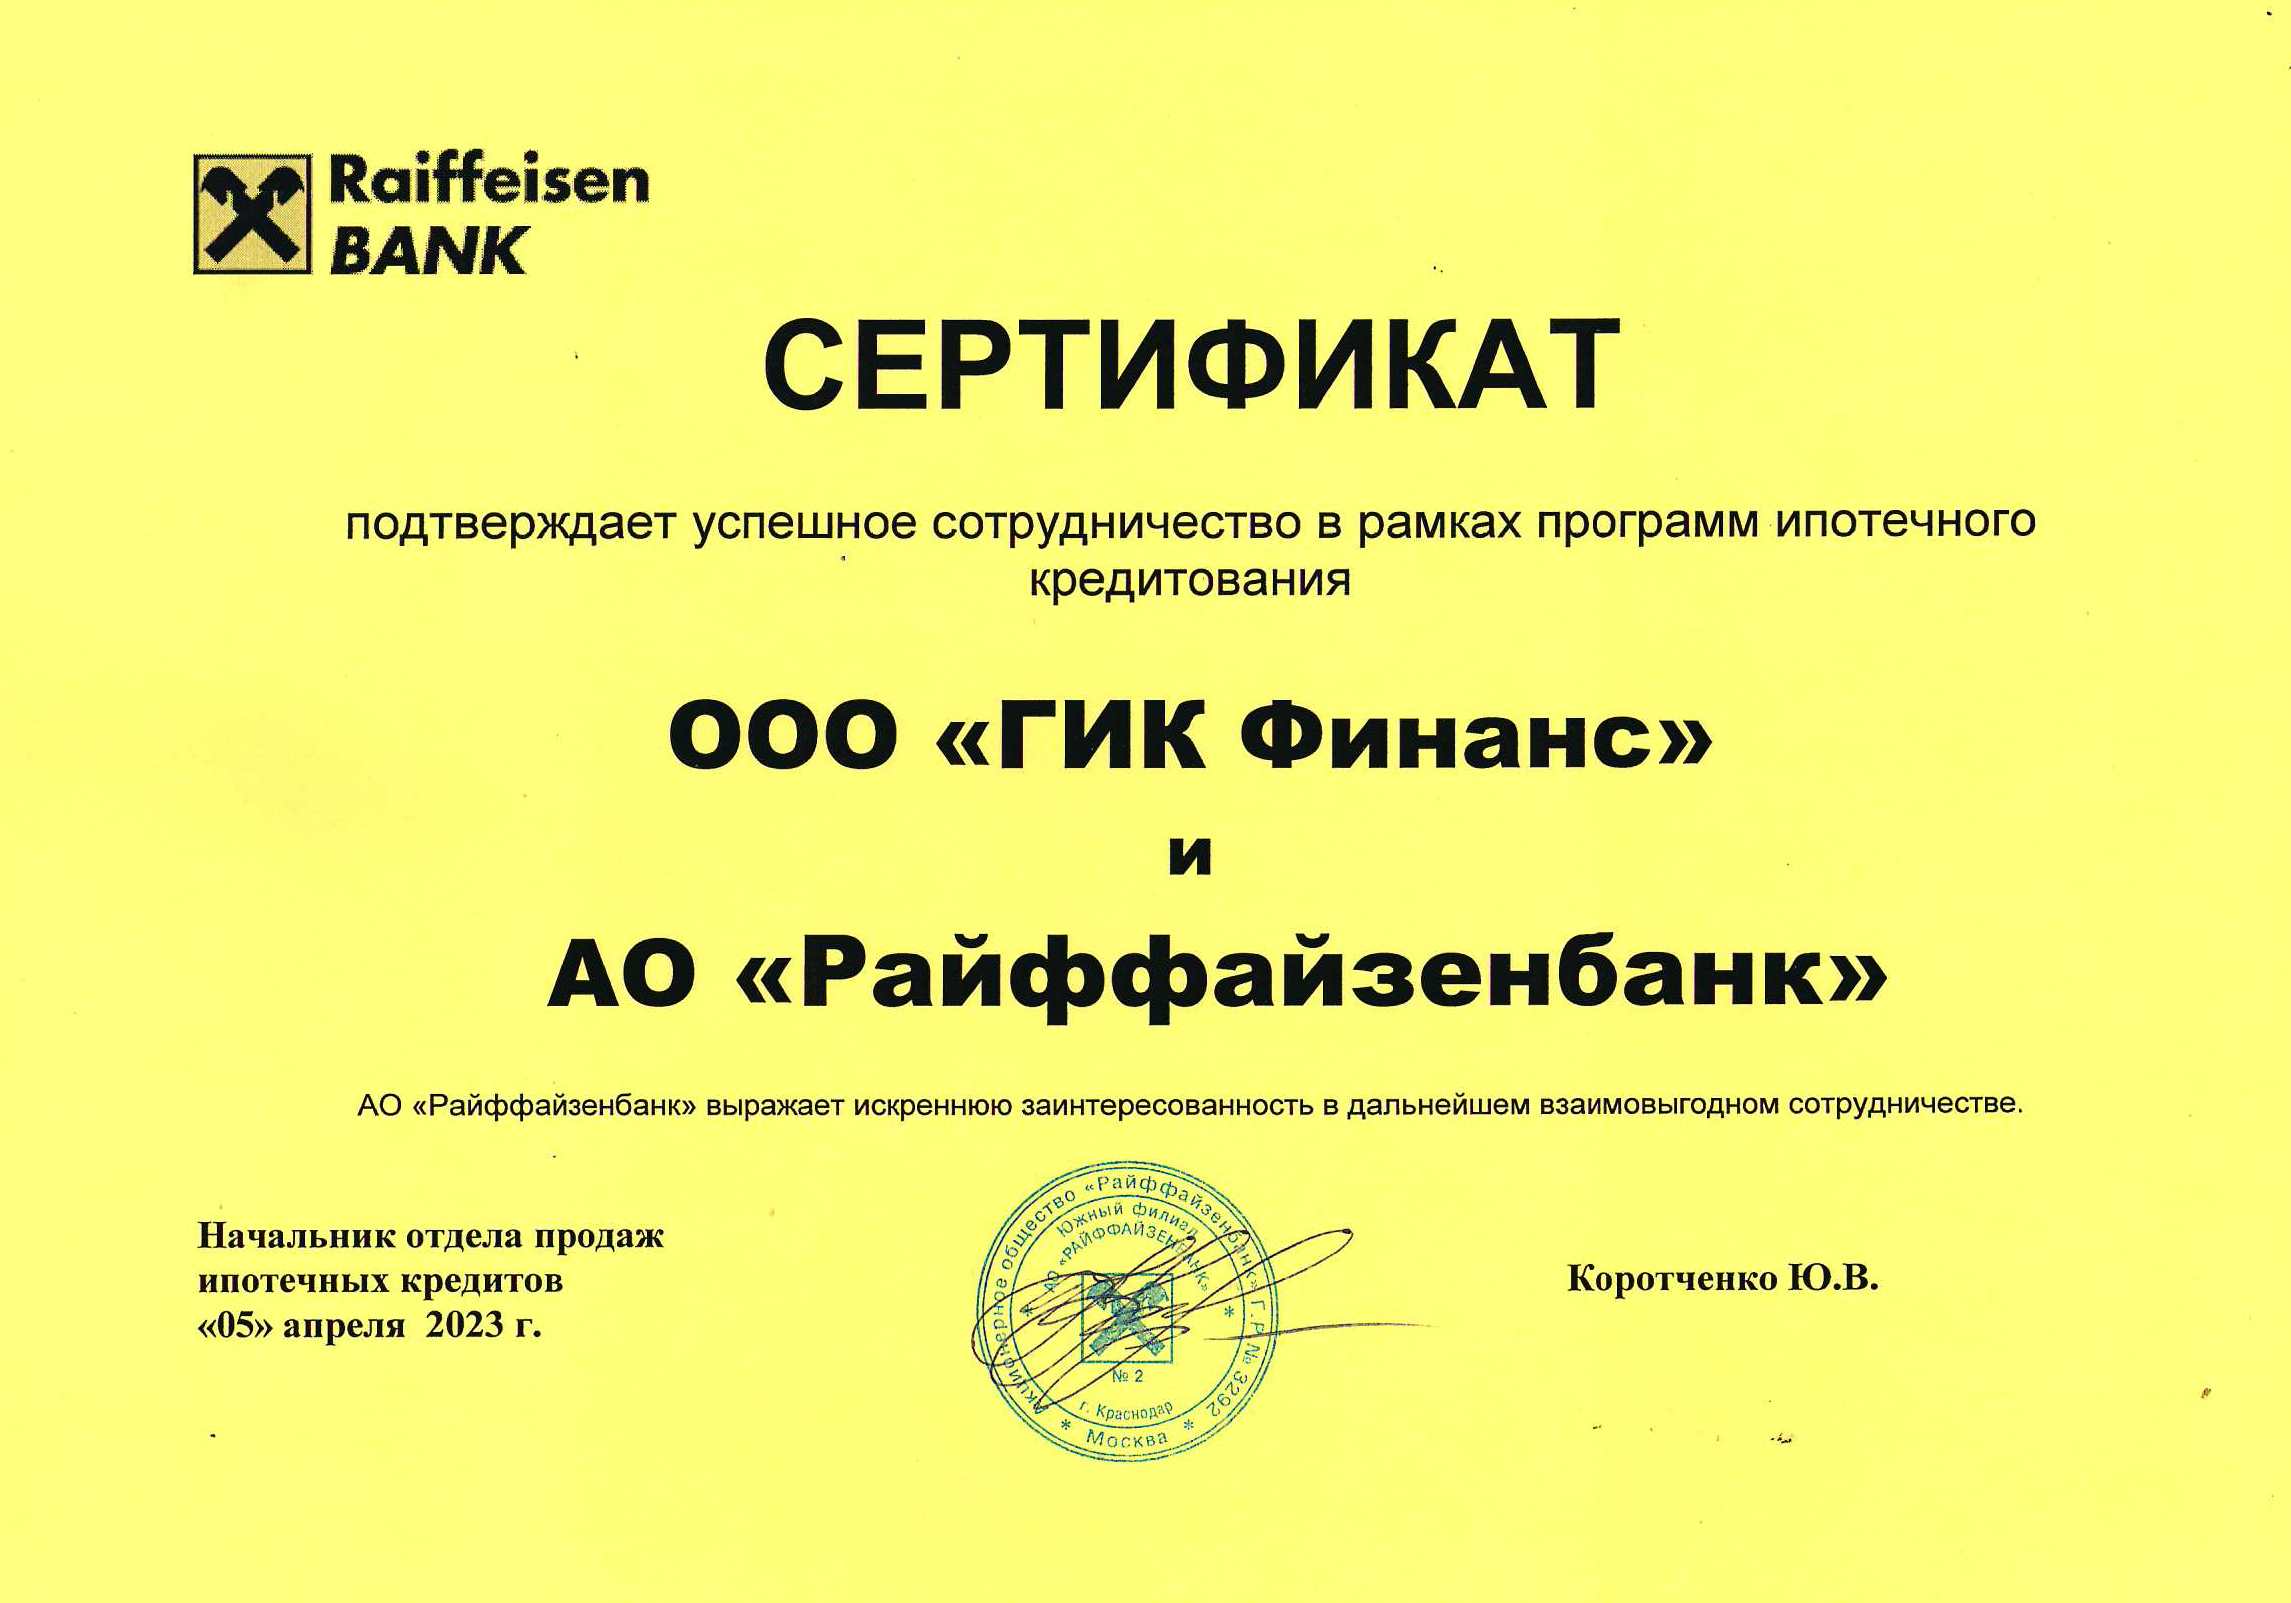 Сертификат о сотрудничестве с АО "Райффайзенбанк"